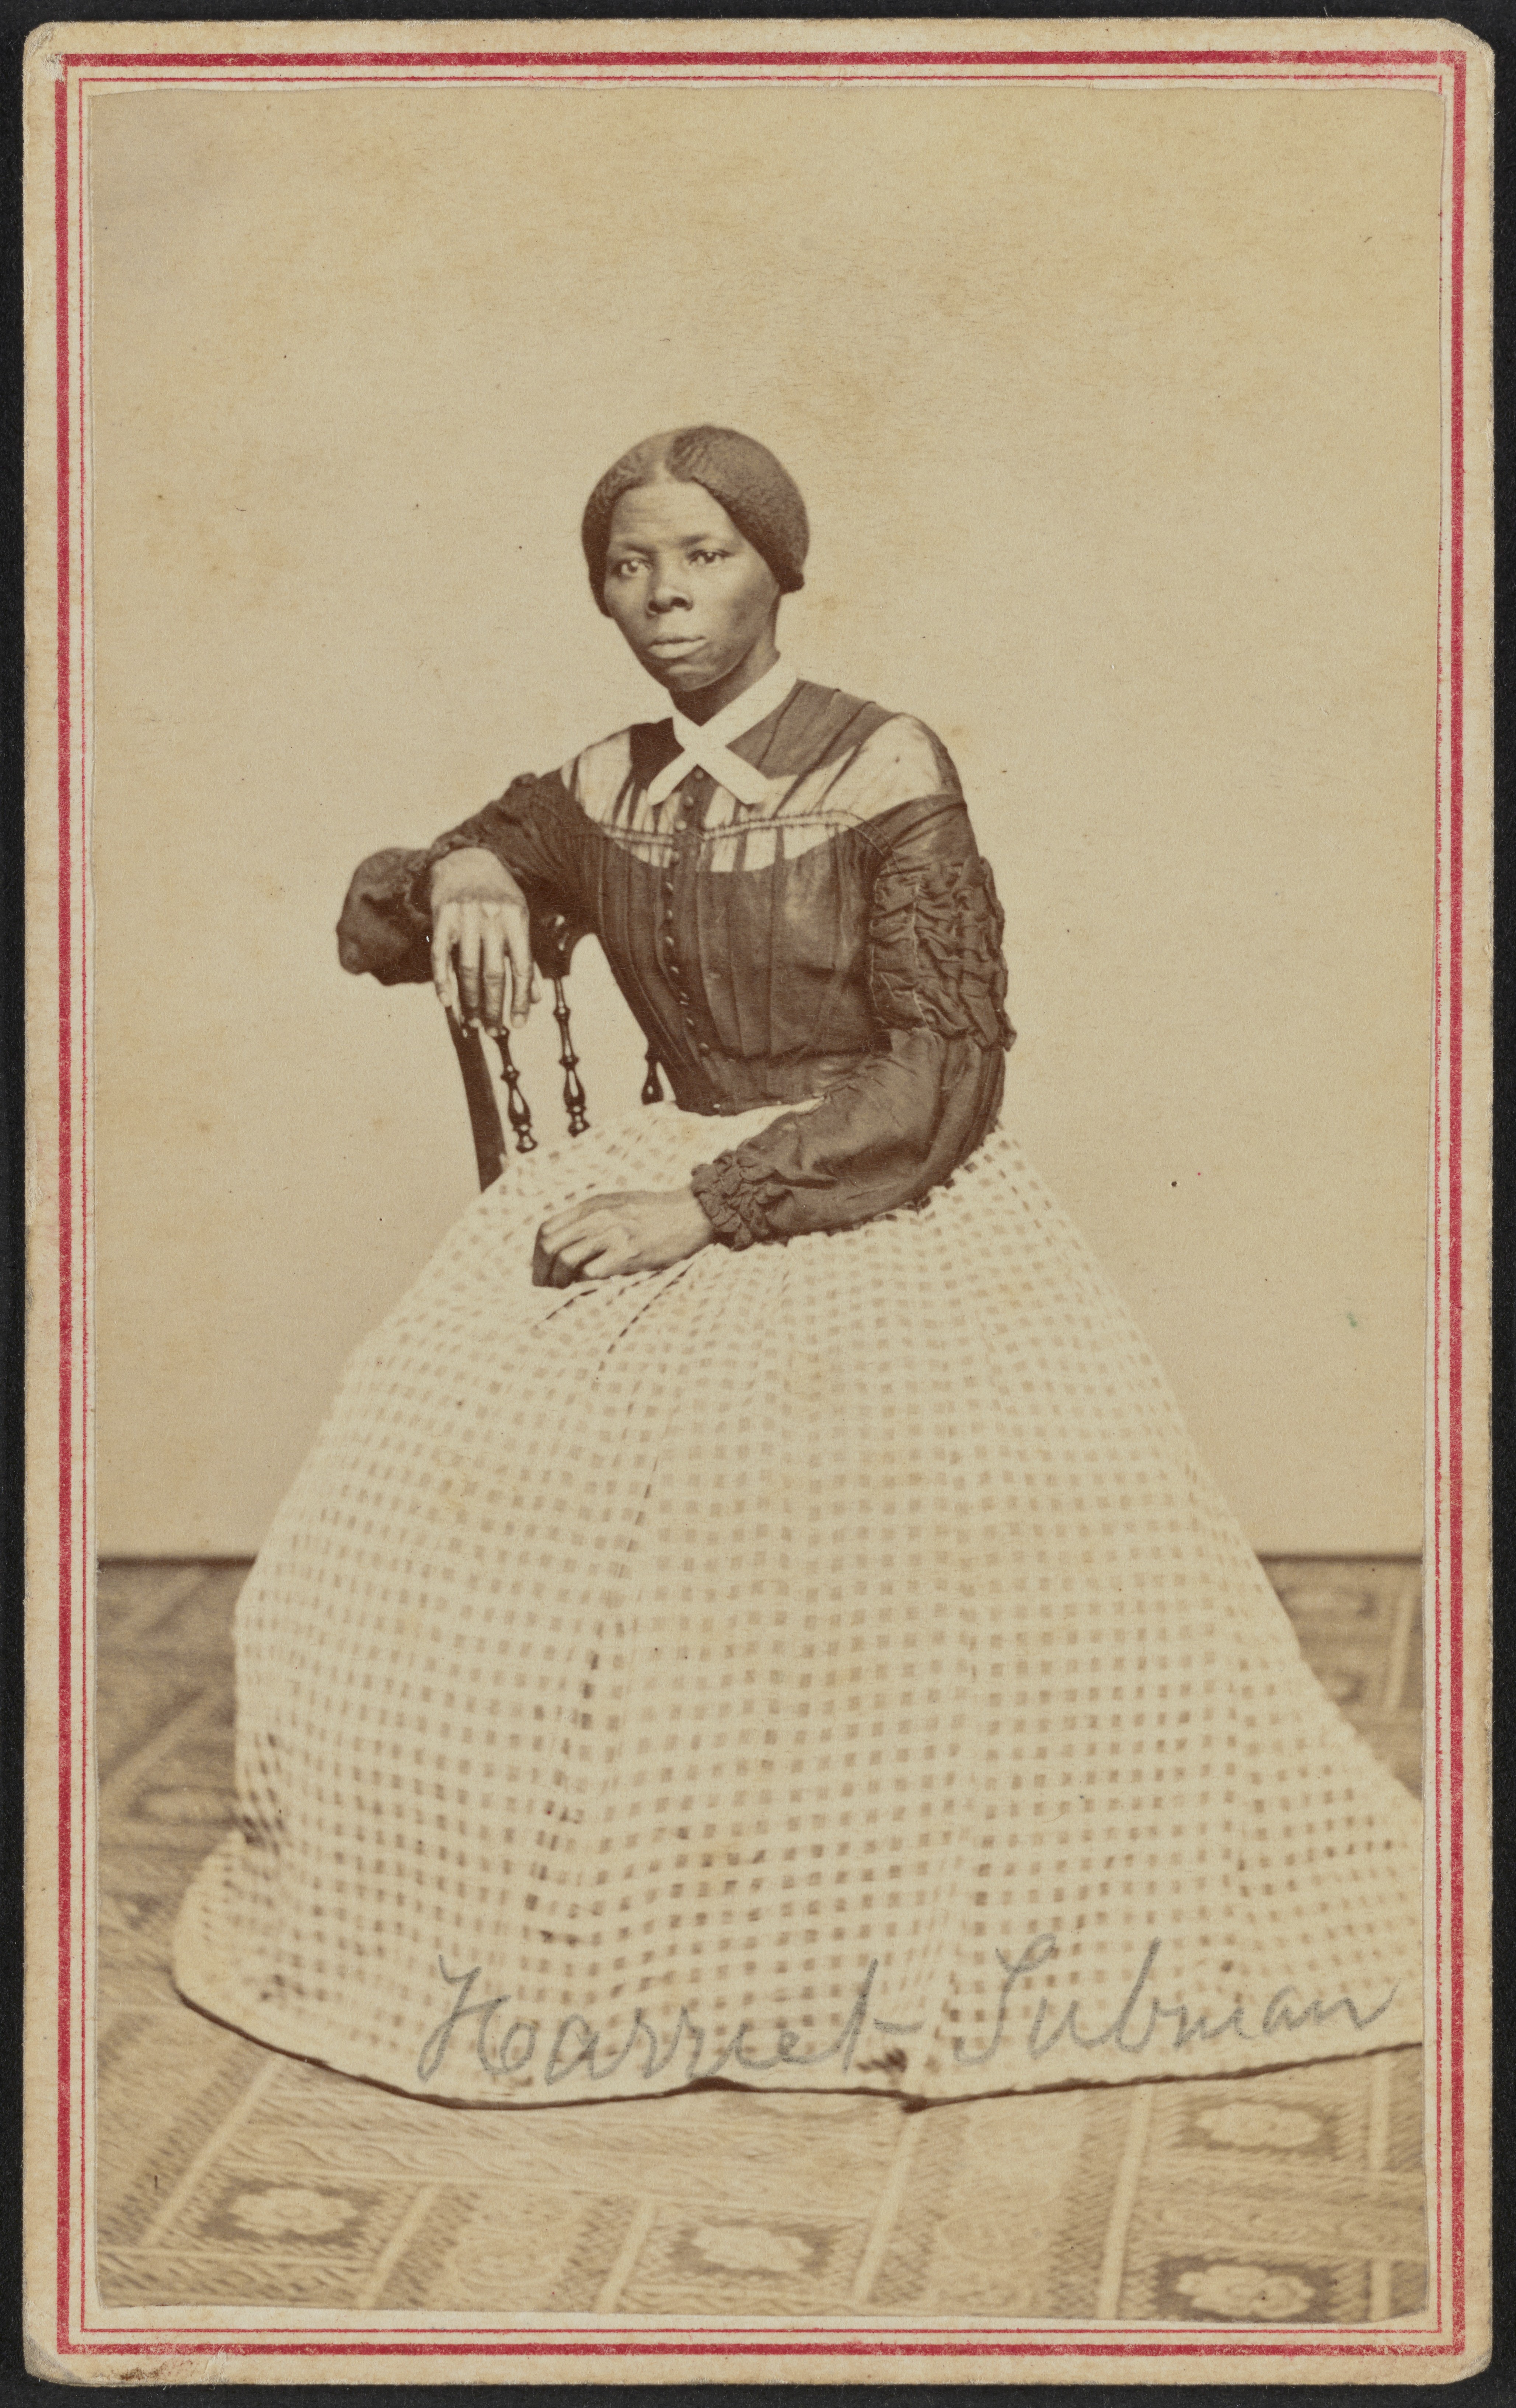 Harriet Tubman: quem foi a abolicionista que estampará notas de US$ 20 (Foto: Wikimedia Commons)